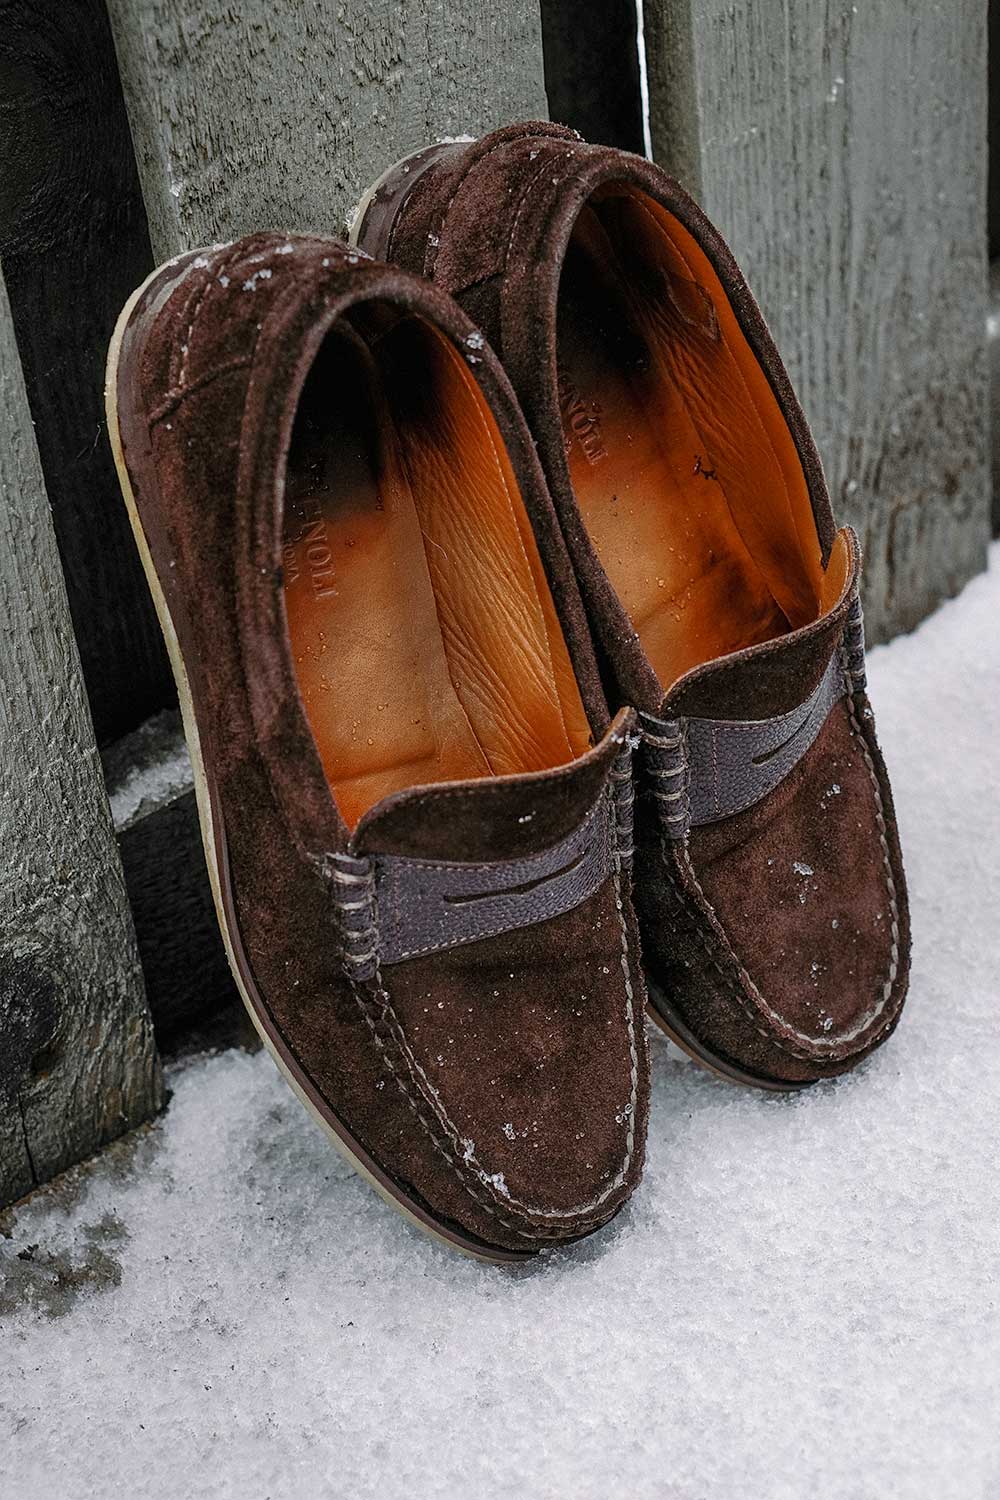 wearing loafers winter